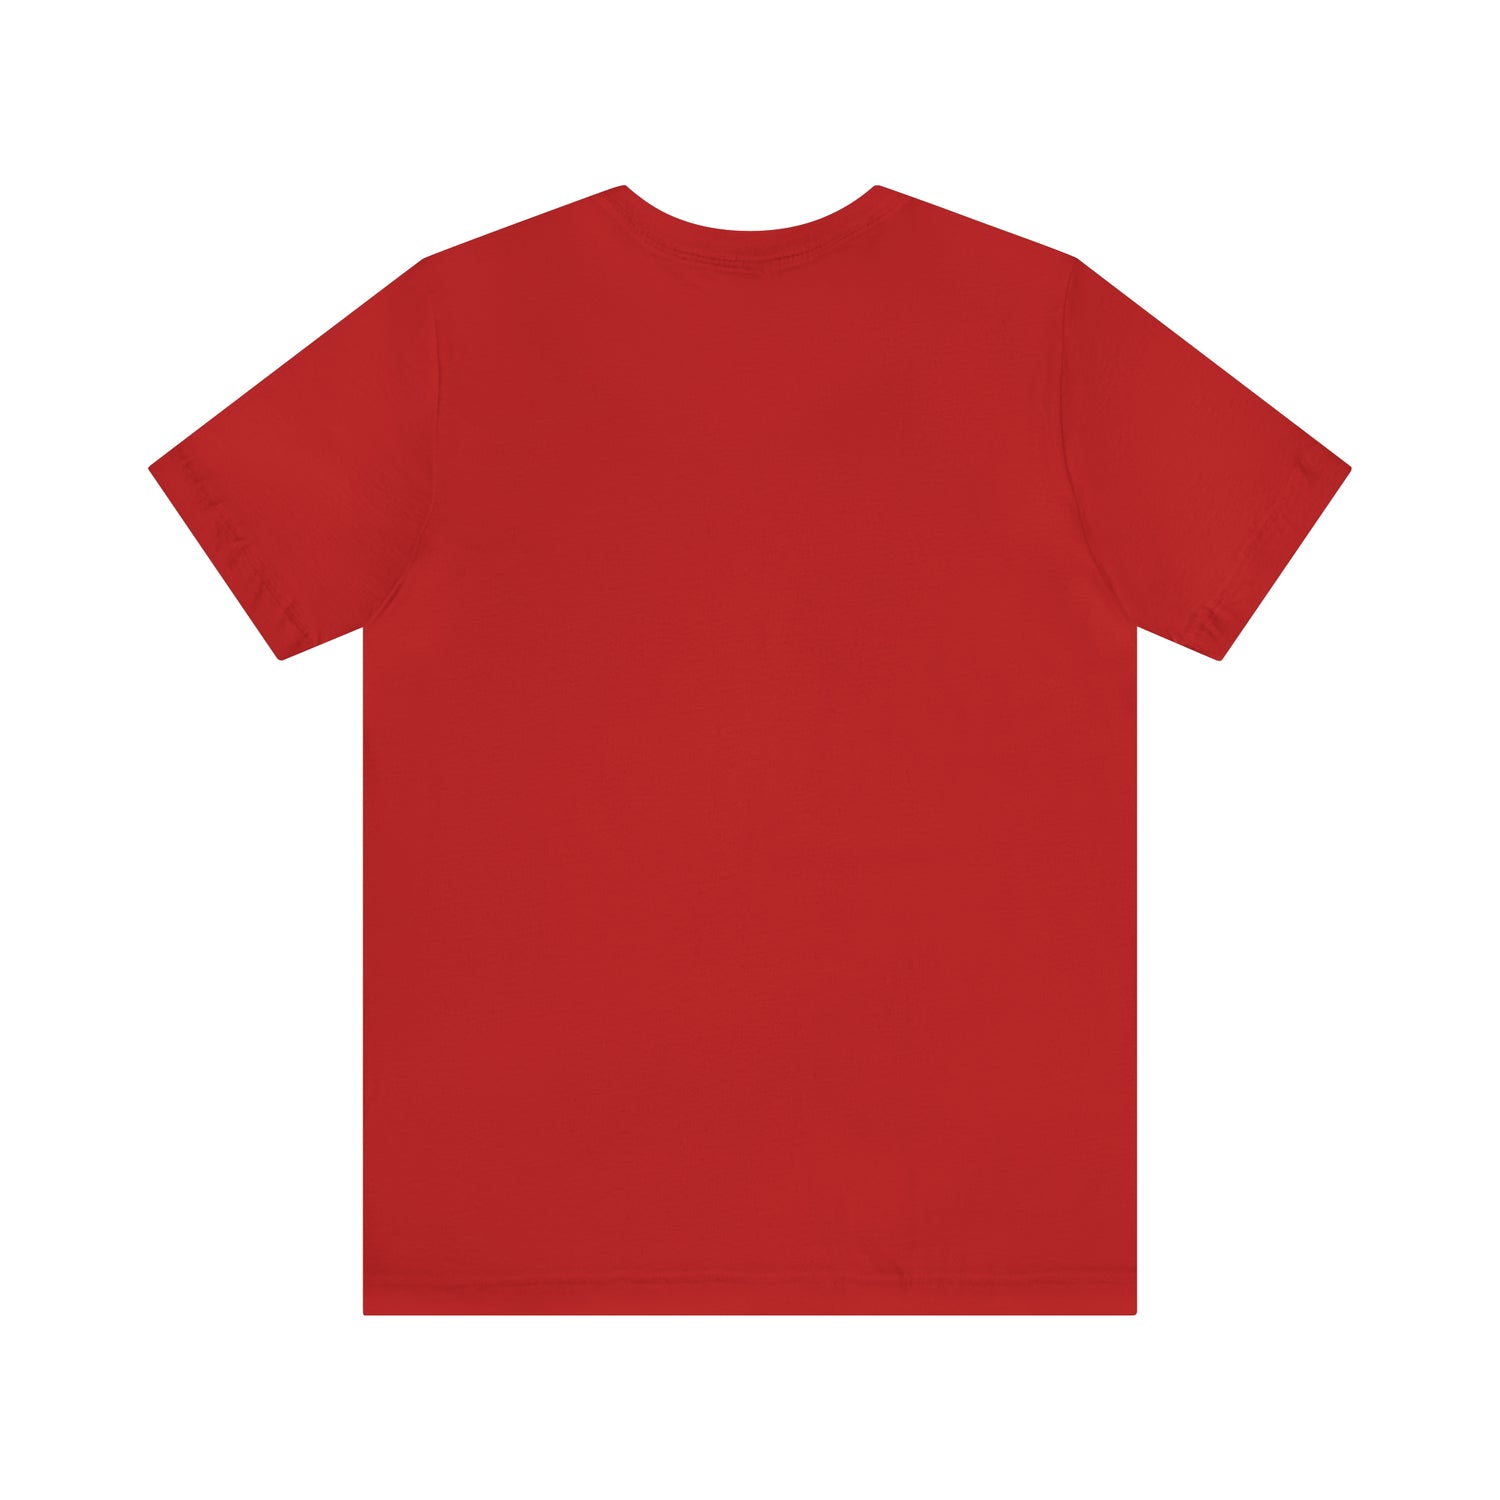 T-Shirt for Traveler | Travel Hobby Gift Idea T-Shirt Petrova Designs